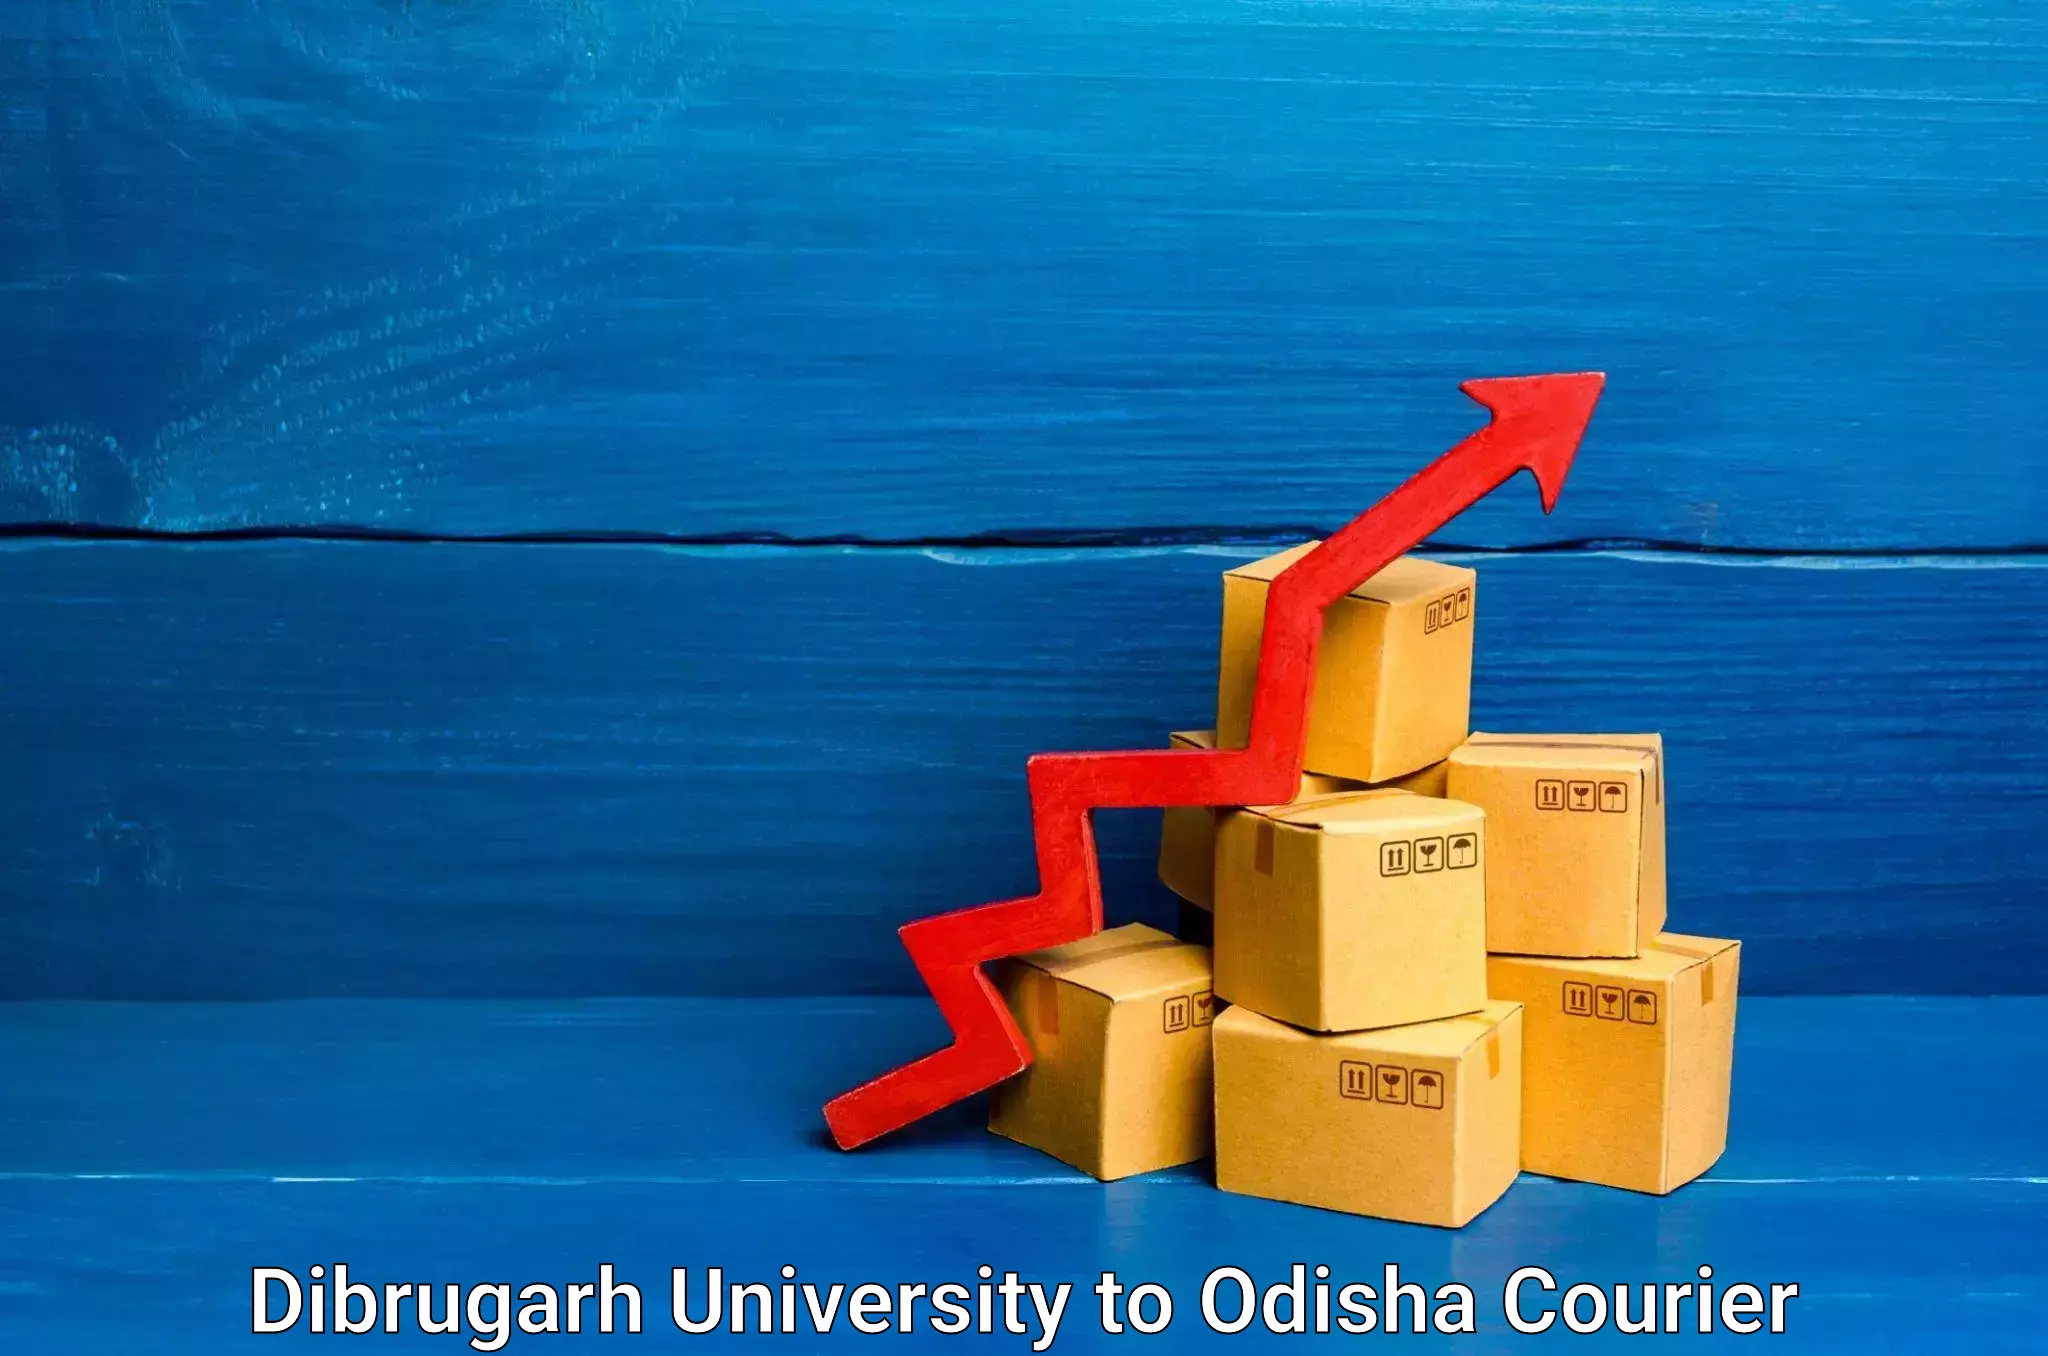 Budget-friendly shipping Dibrugarh University to Gunupur